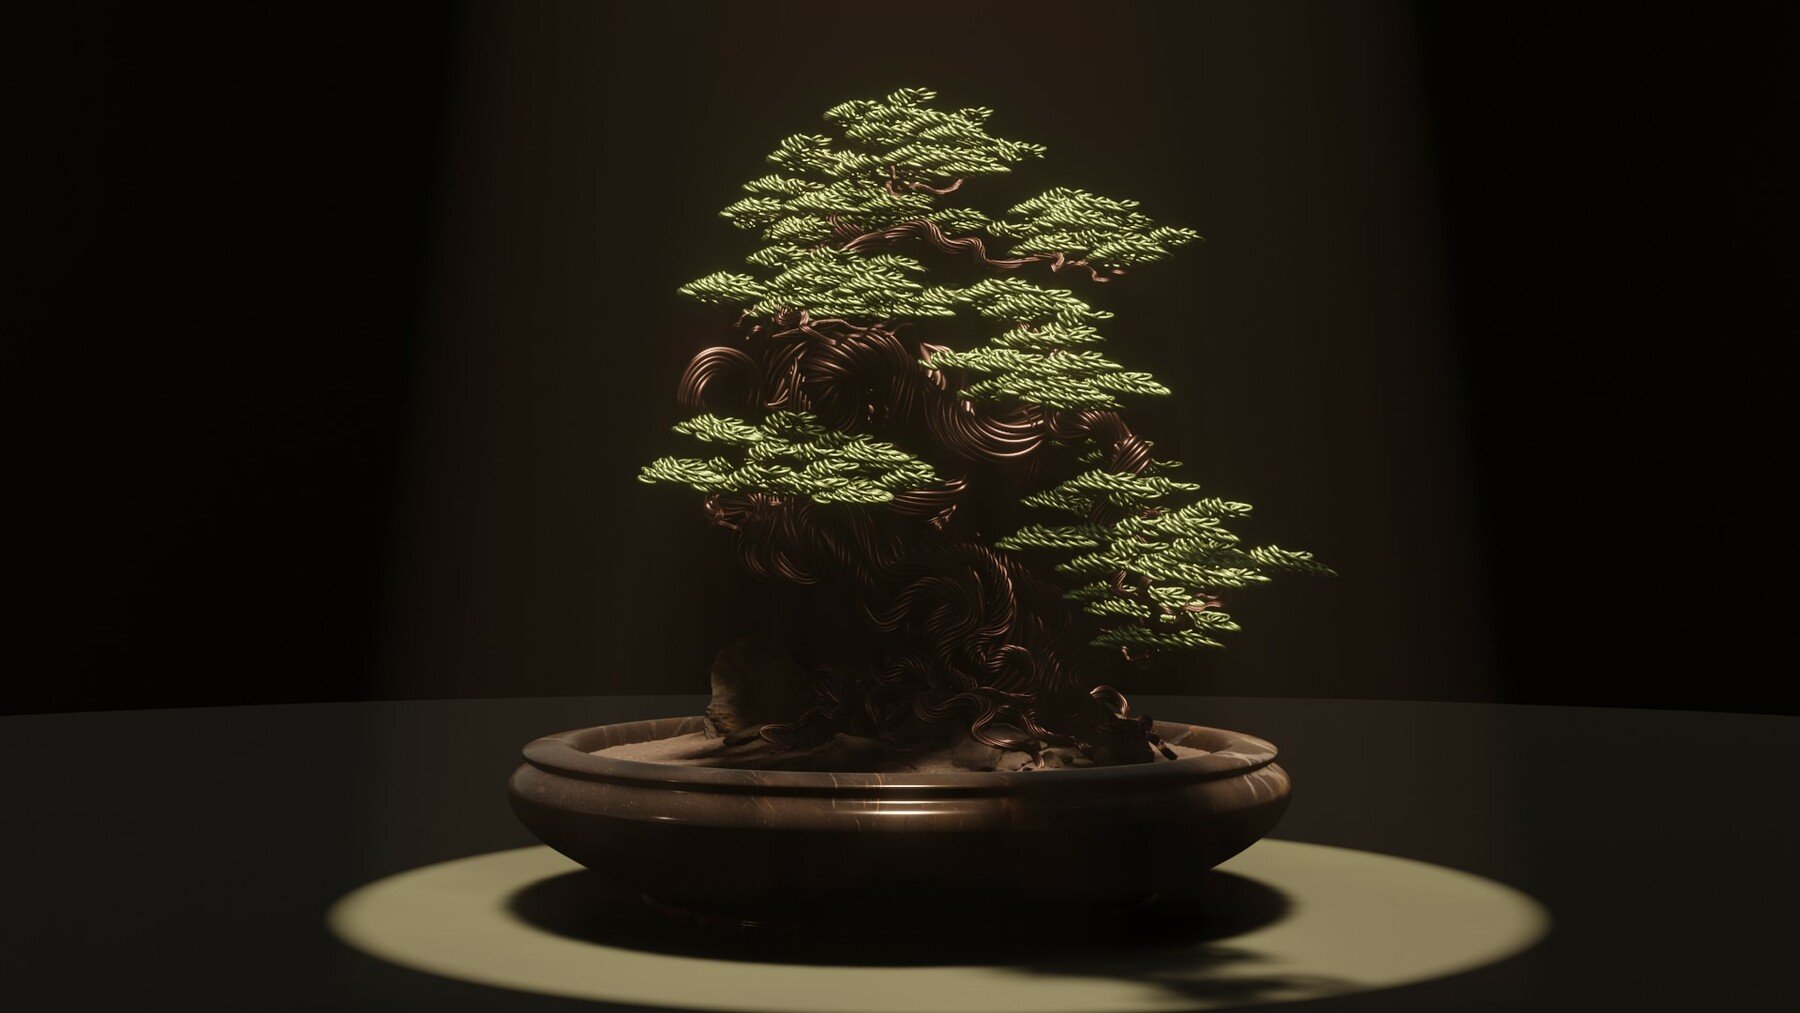 ArtStation - Bonsai tree copper wire | Resources